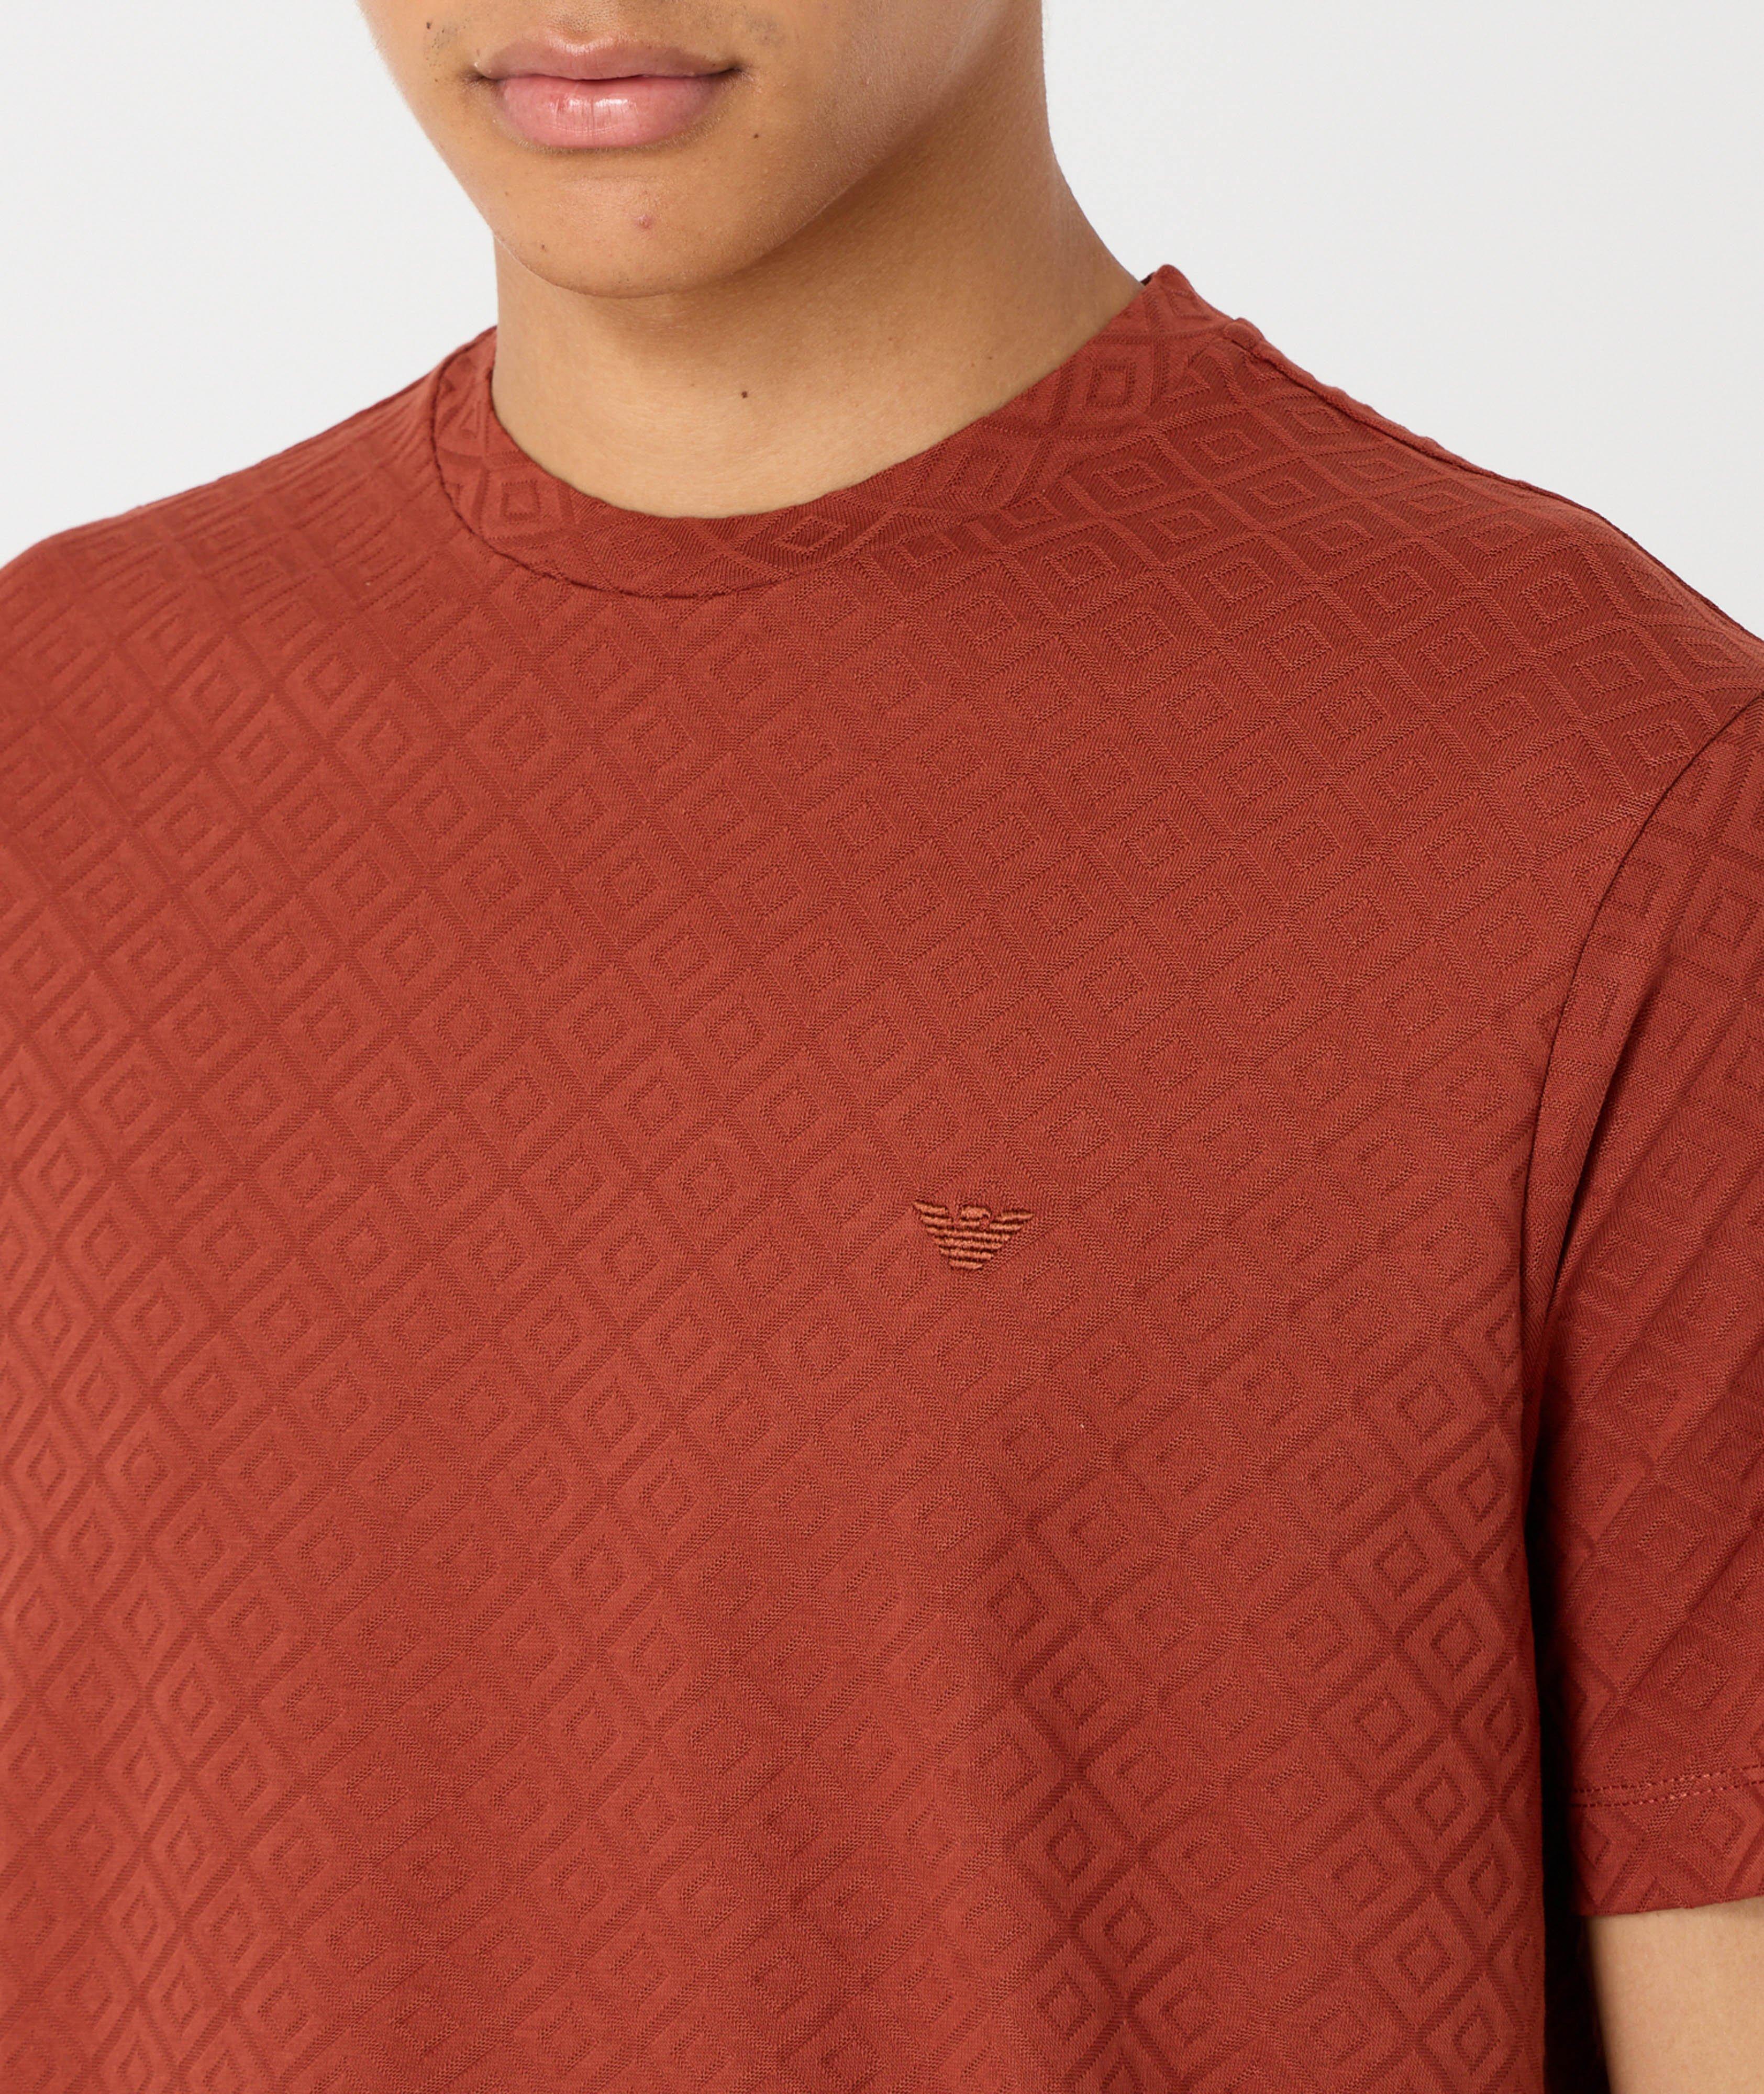 Jacquard Jersey Cotton T-Shirt image 3